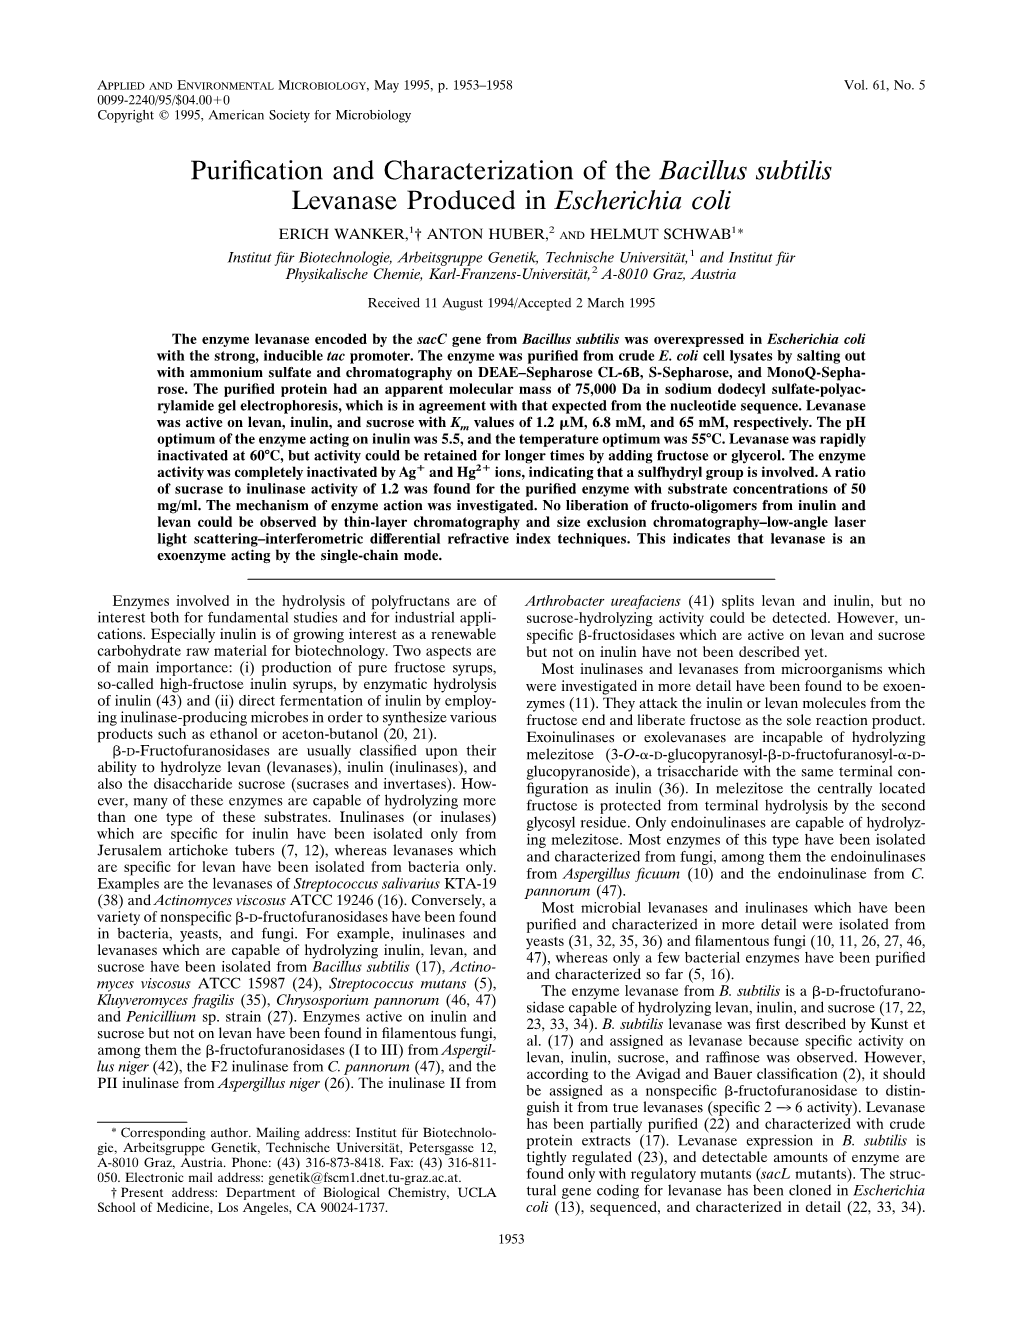 Purification and Characterization of the Bacillus Subtilis Levanase